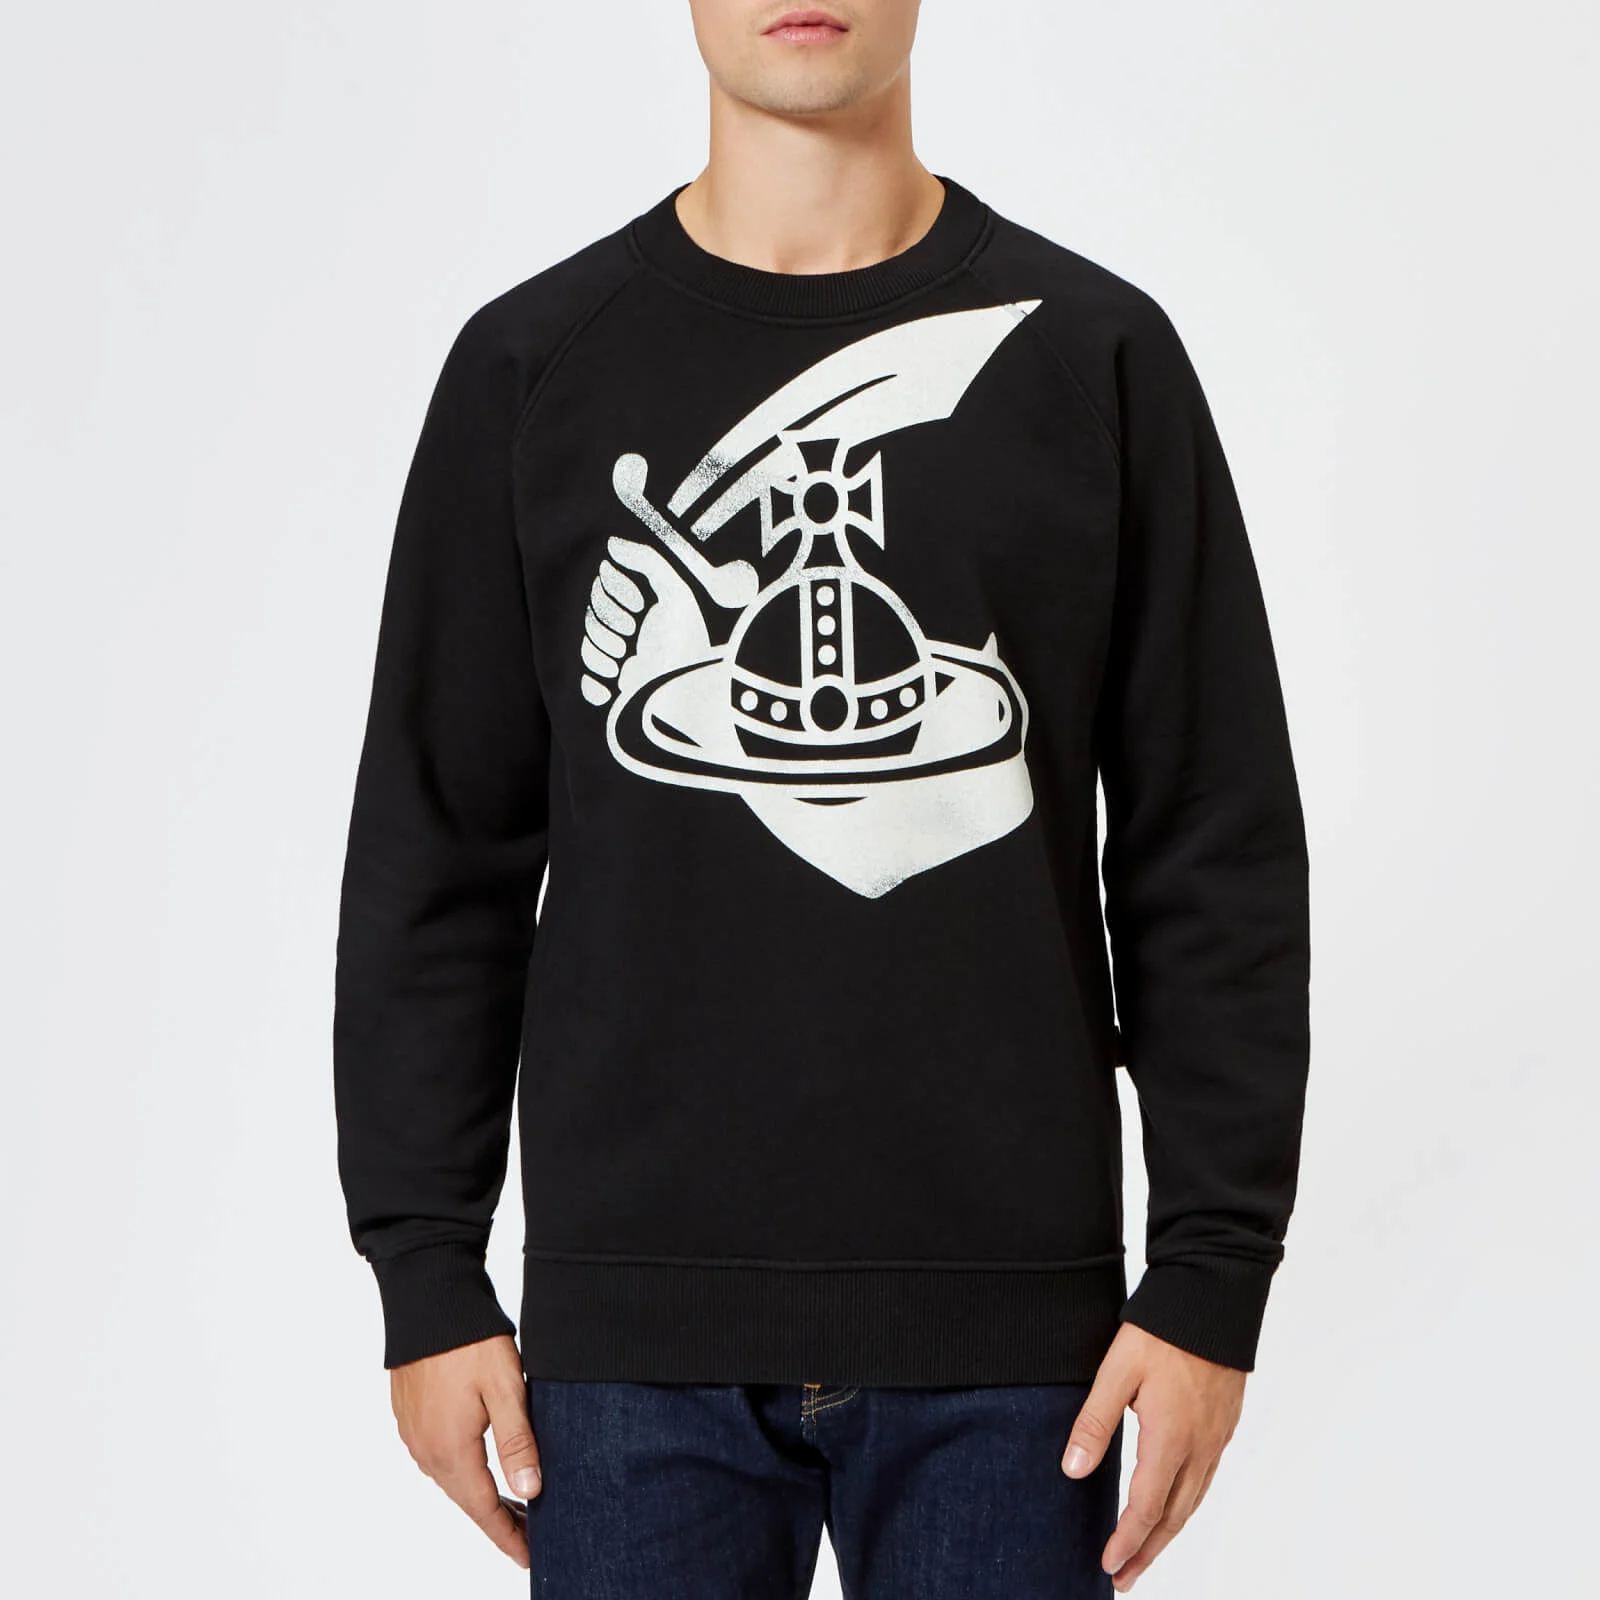 Vivienne Westwood Anglomania Men's Classic Logo Sweatshirt - Black Image 1